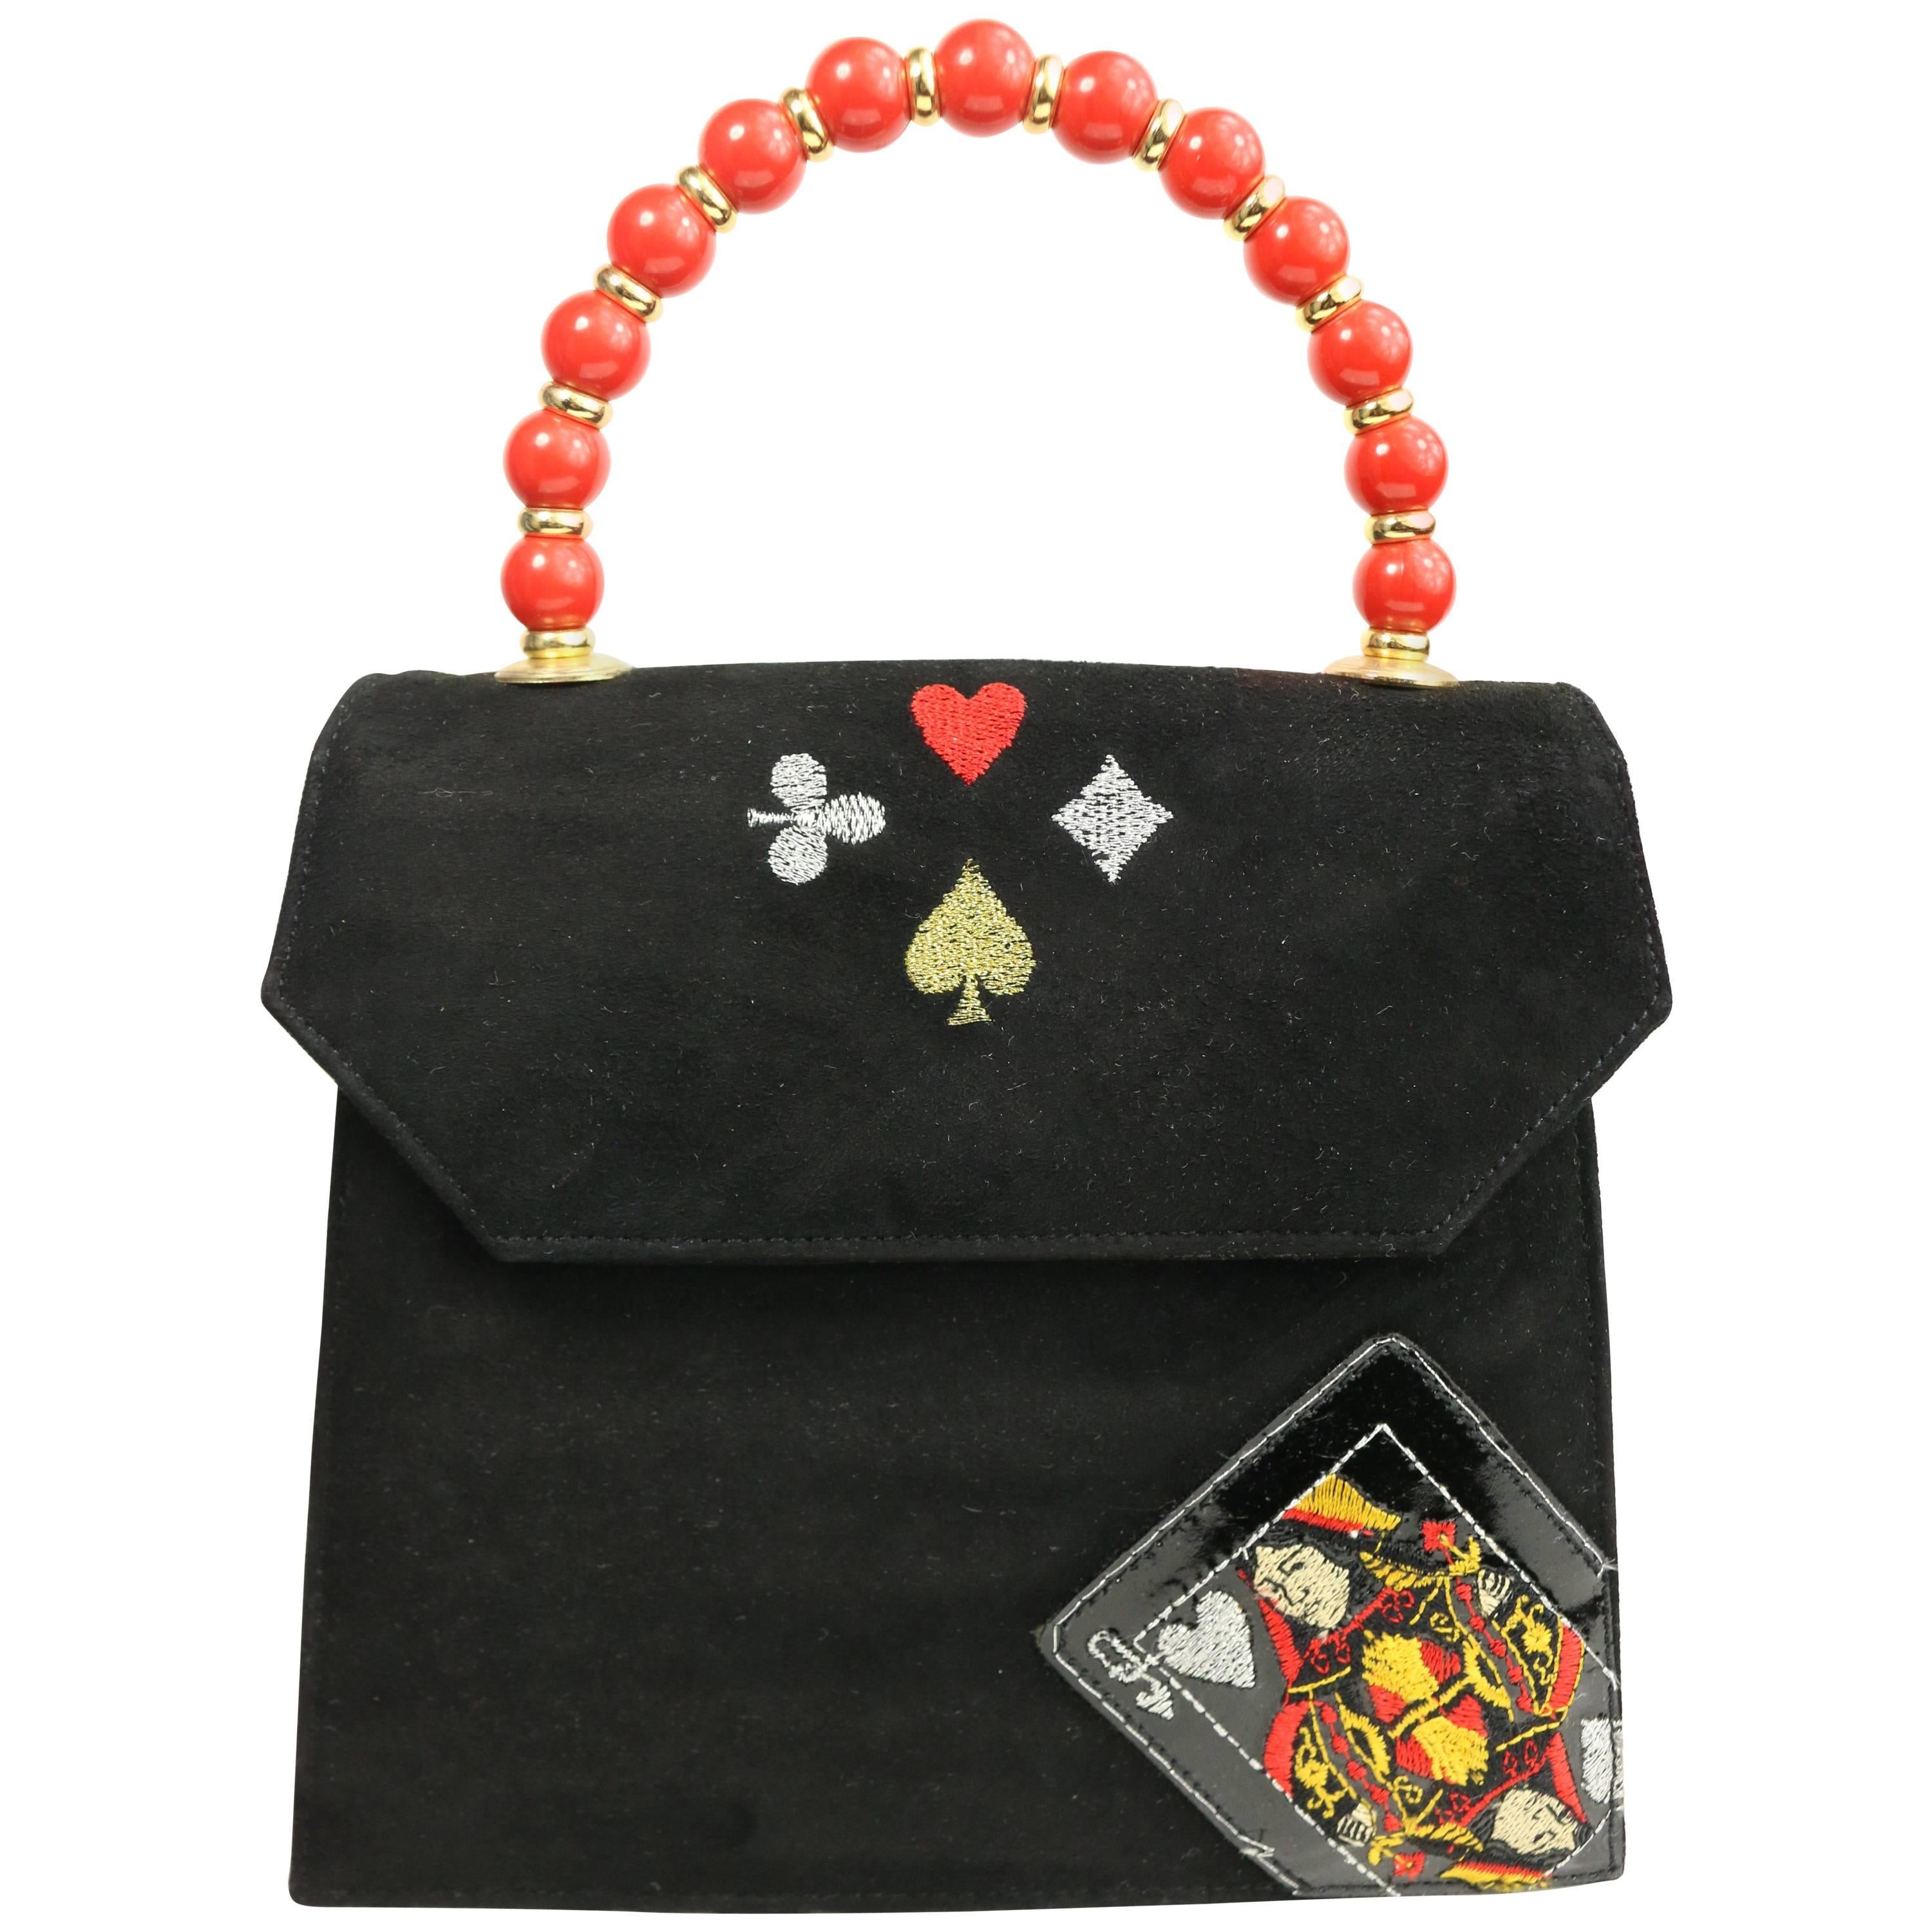 Beverly Feldman Black Suede/Patent with Red Handle Handbag